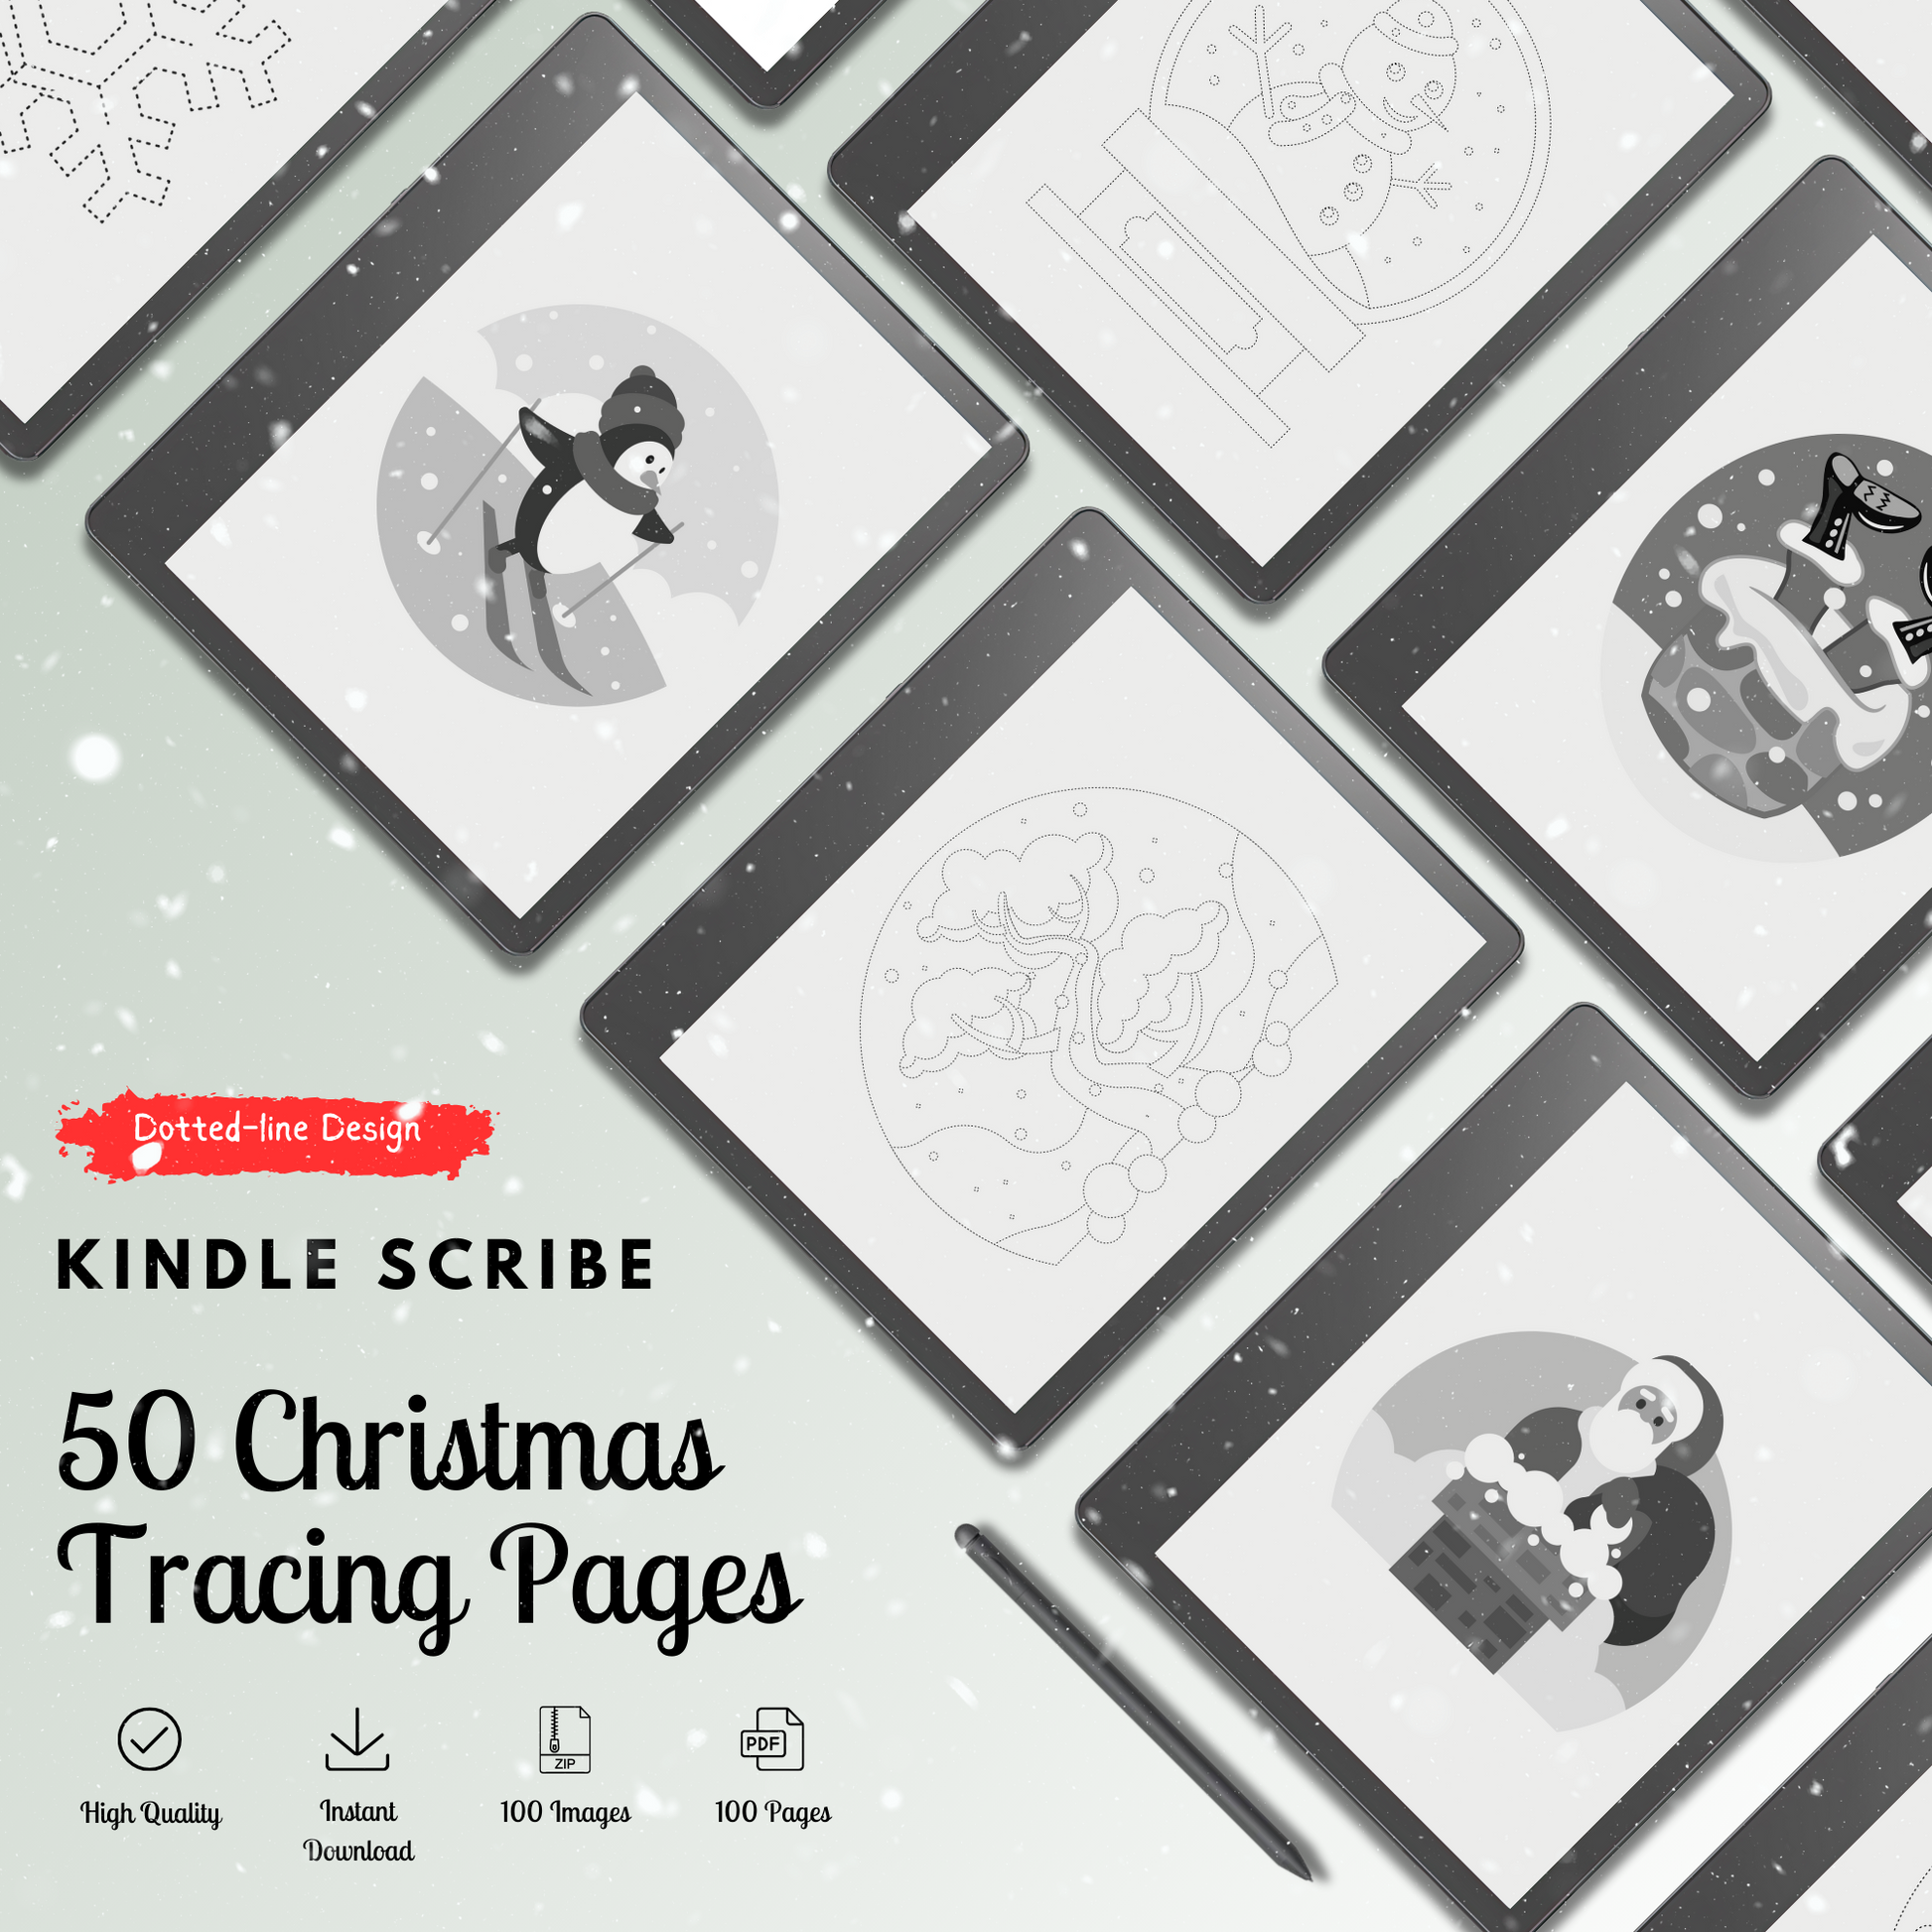 Kindle Scribe Christmas Tracing Pages.